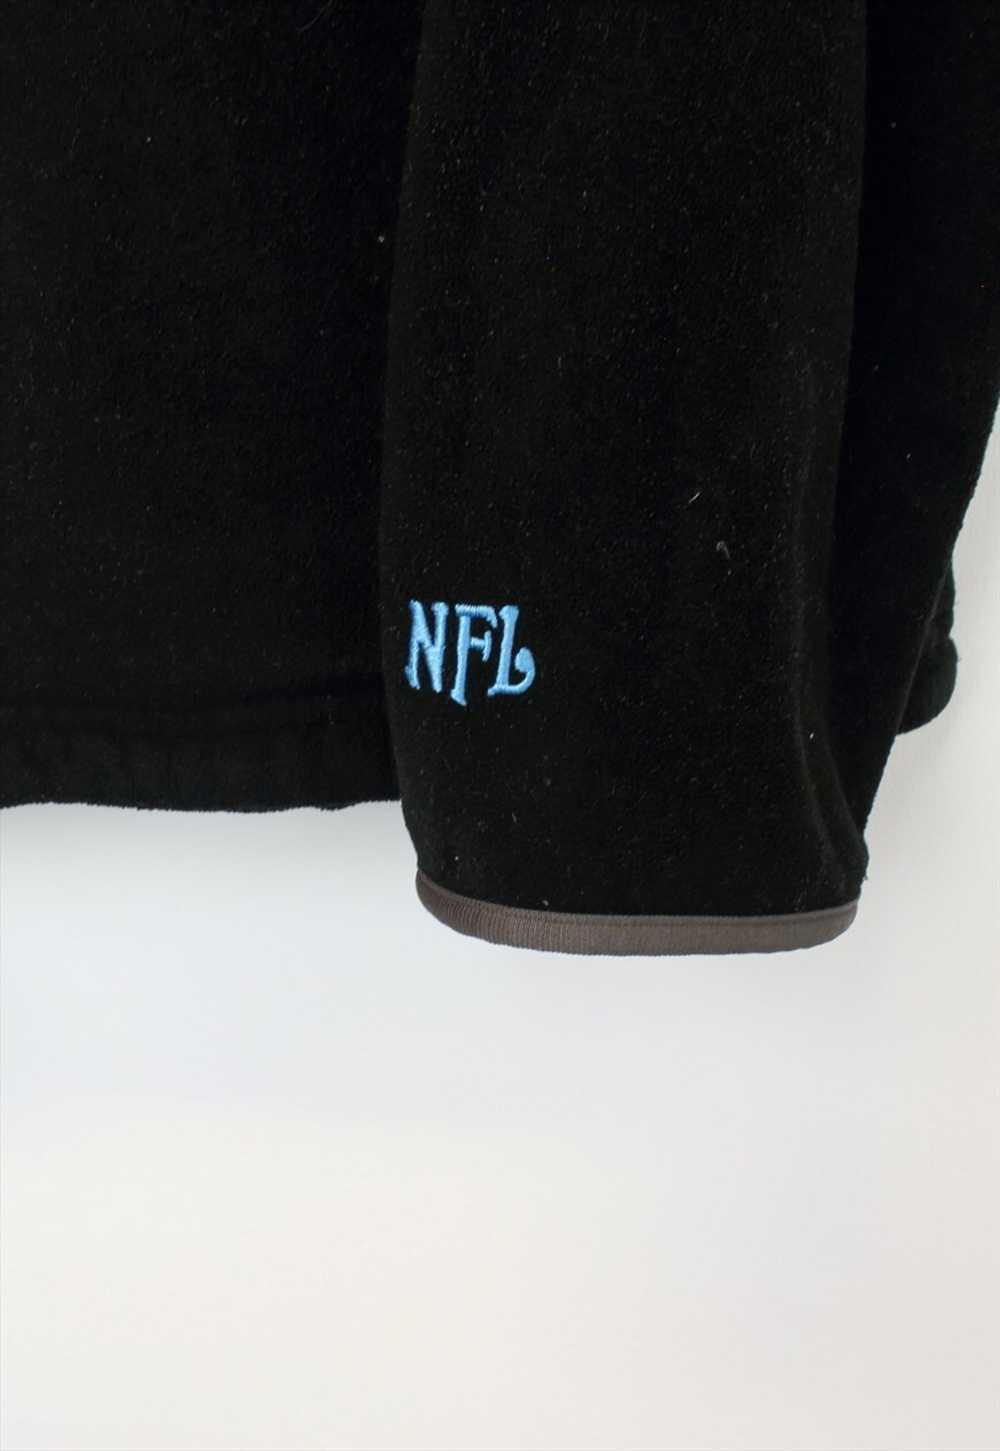 Vintage NFL full zip fleece in black and grey. Be… - image 5